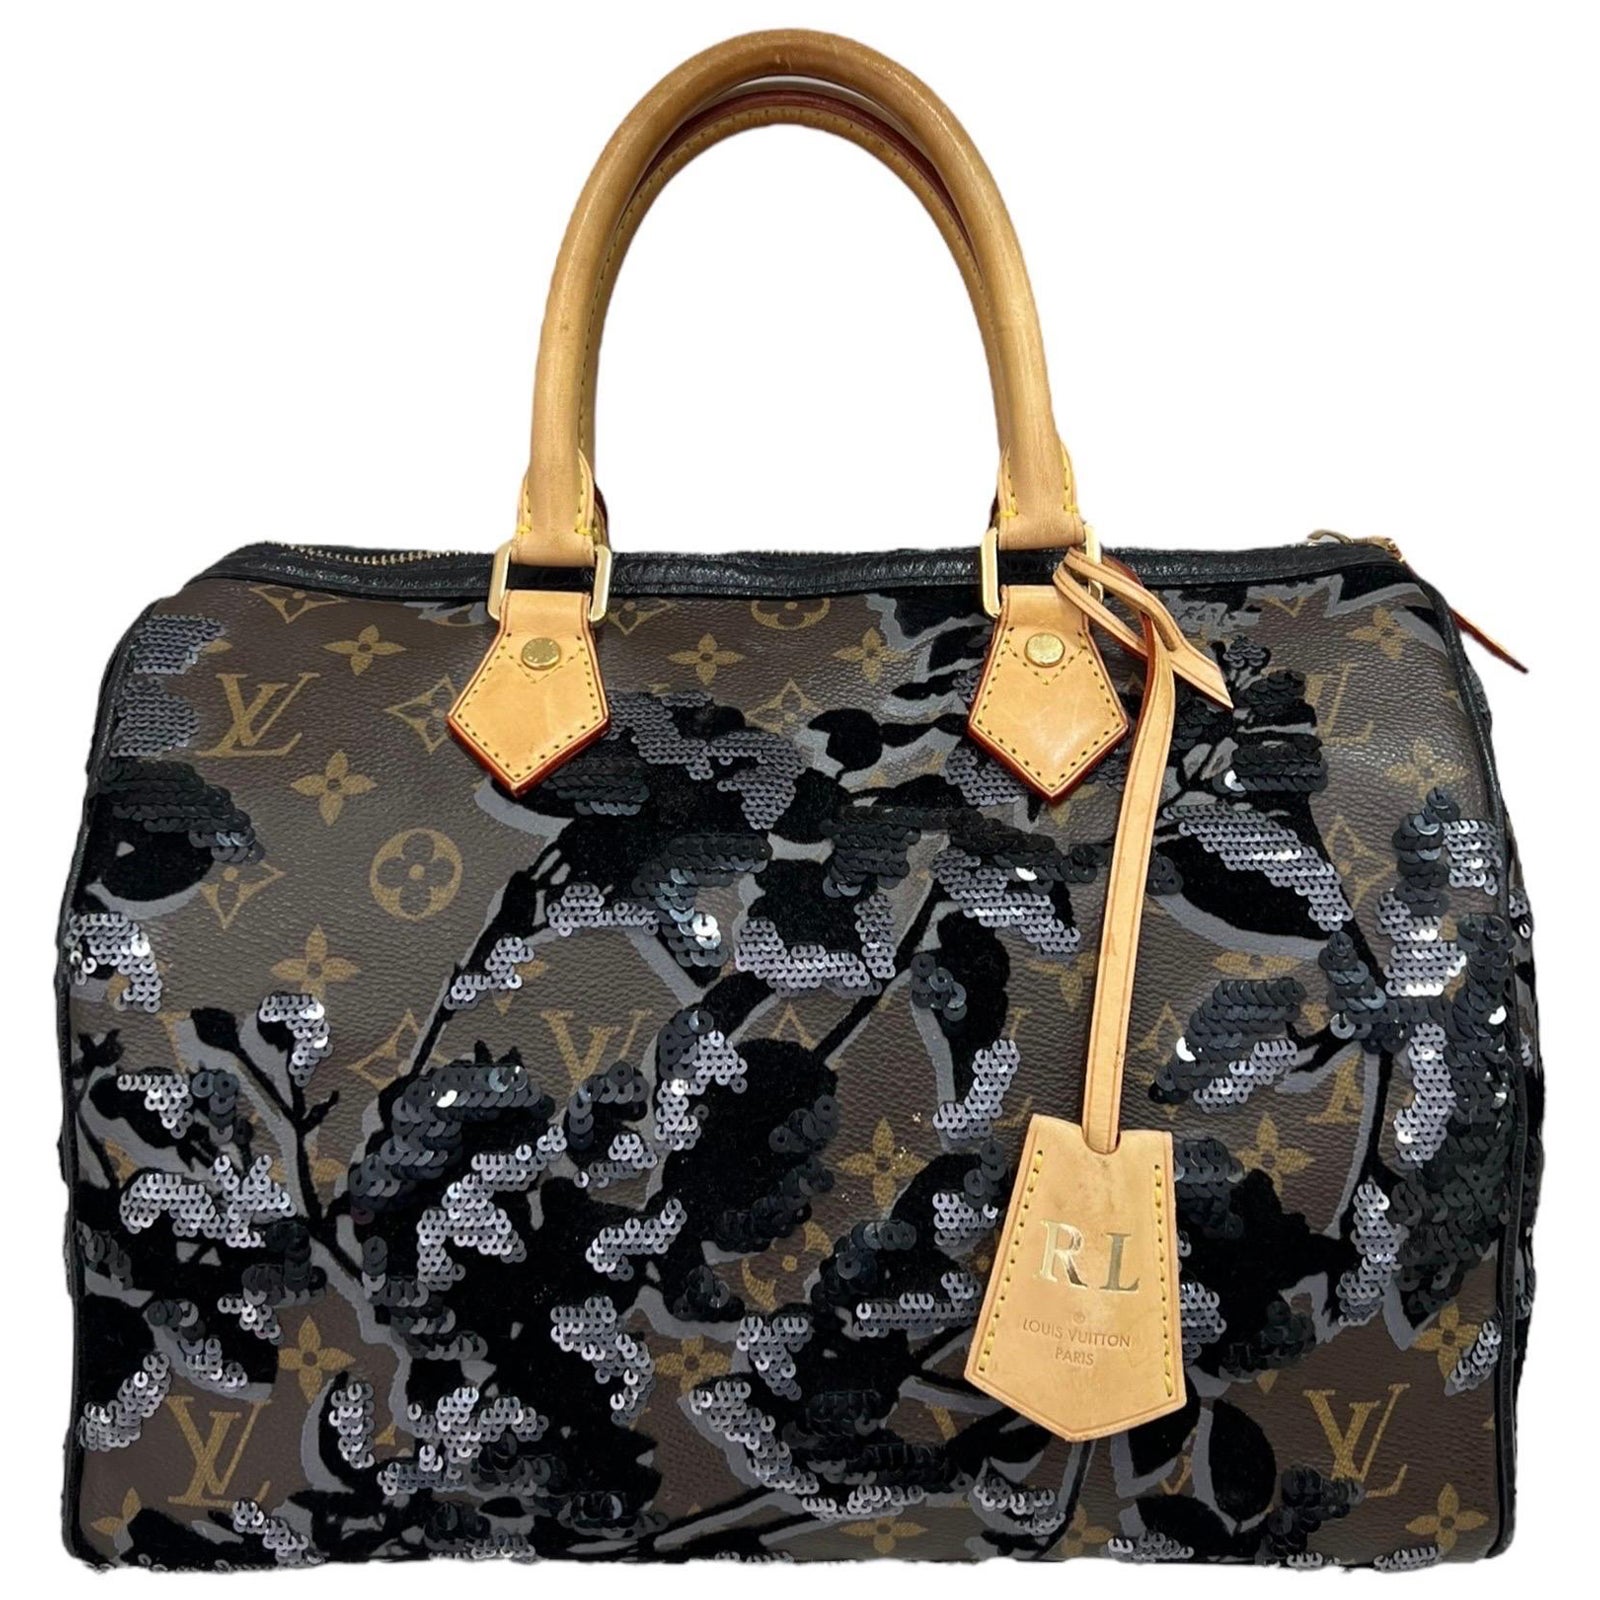 Does Louis Vuitton refurbish handbags?